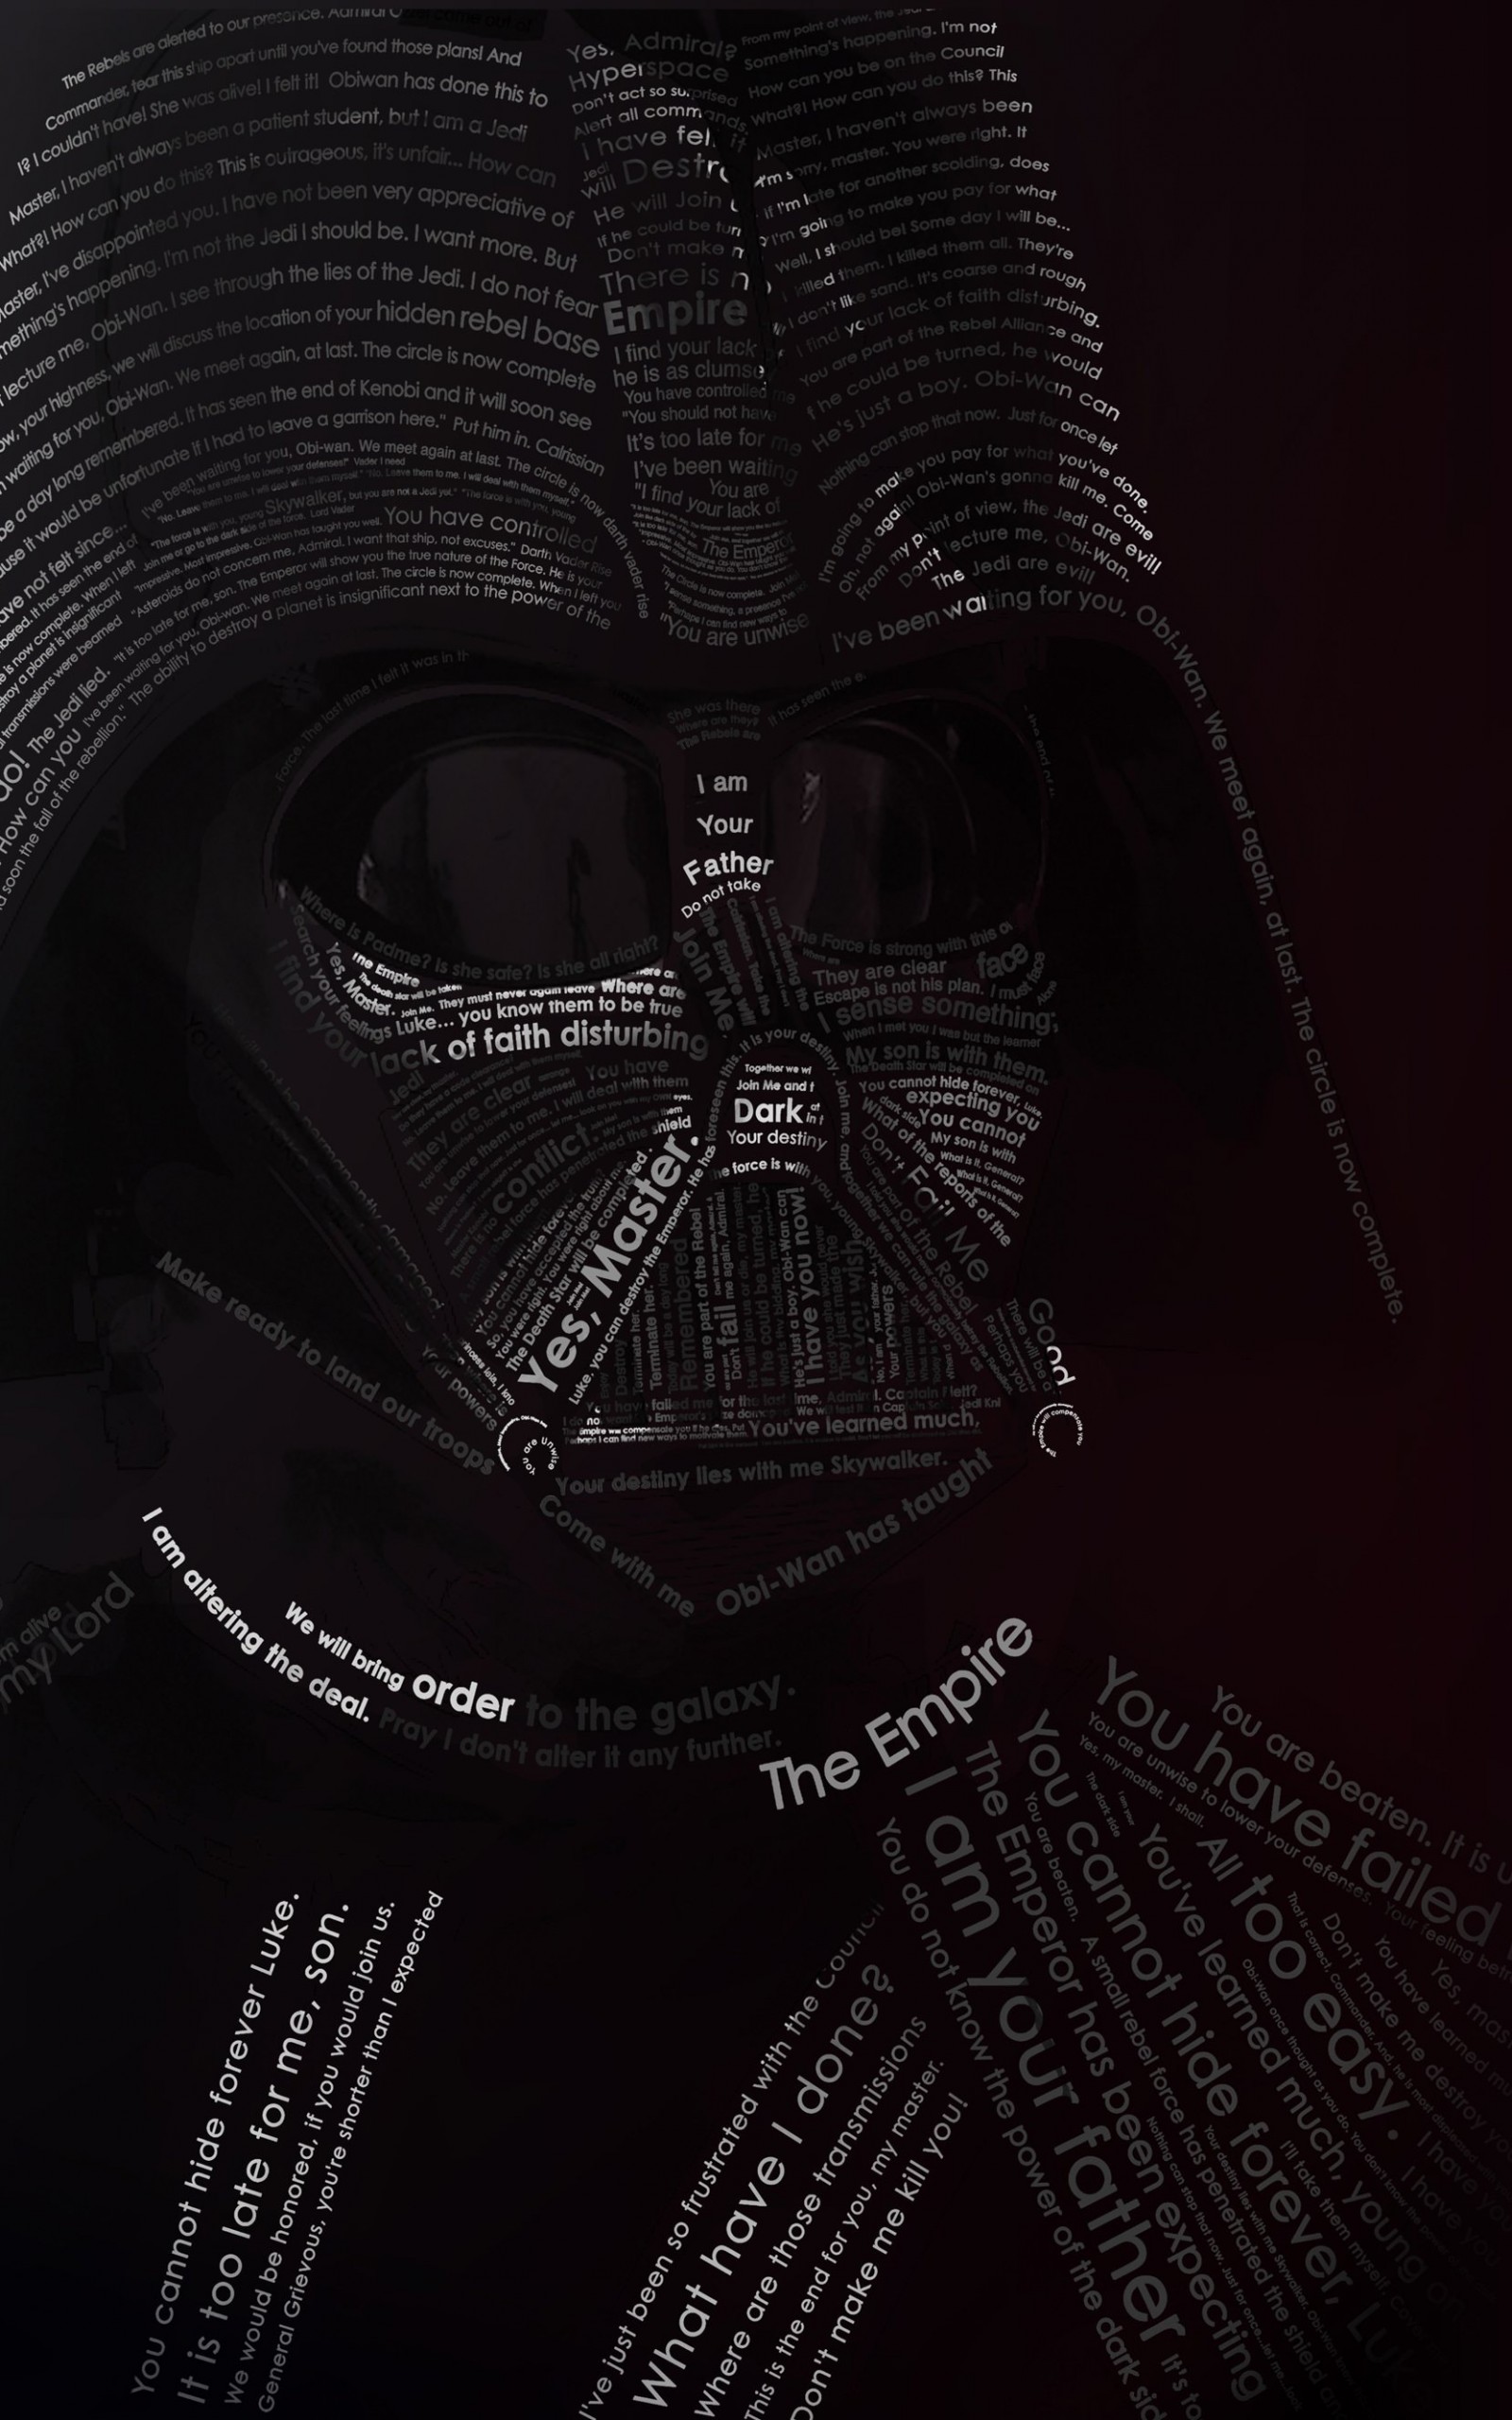 Darth Vader Typographic Portrait Wallpaper for Amazon Kindle Fire HDX 8.9